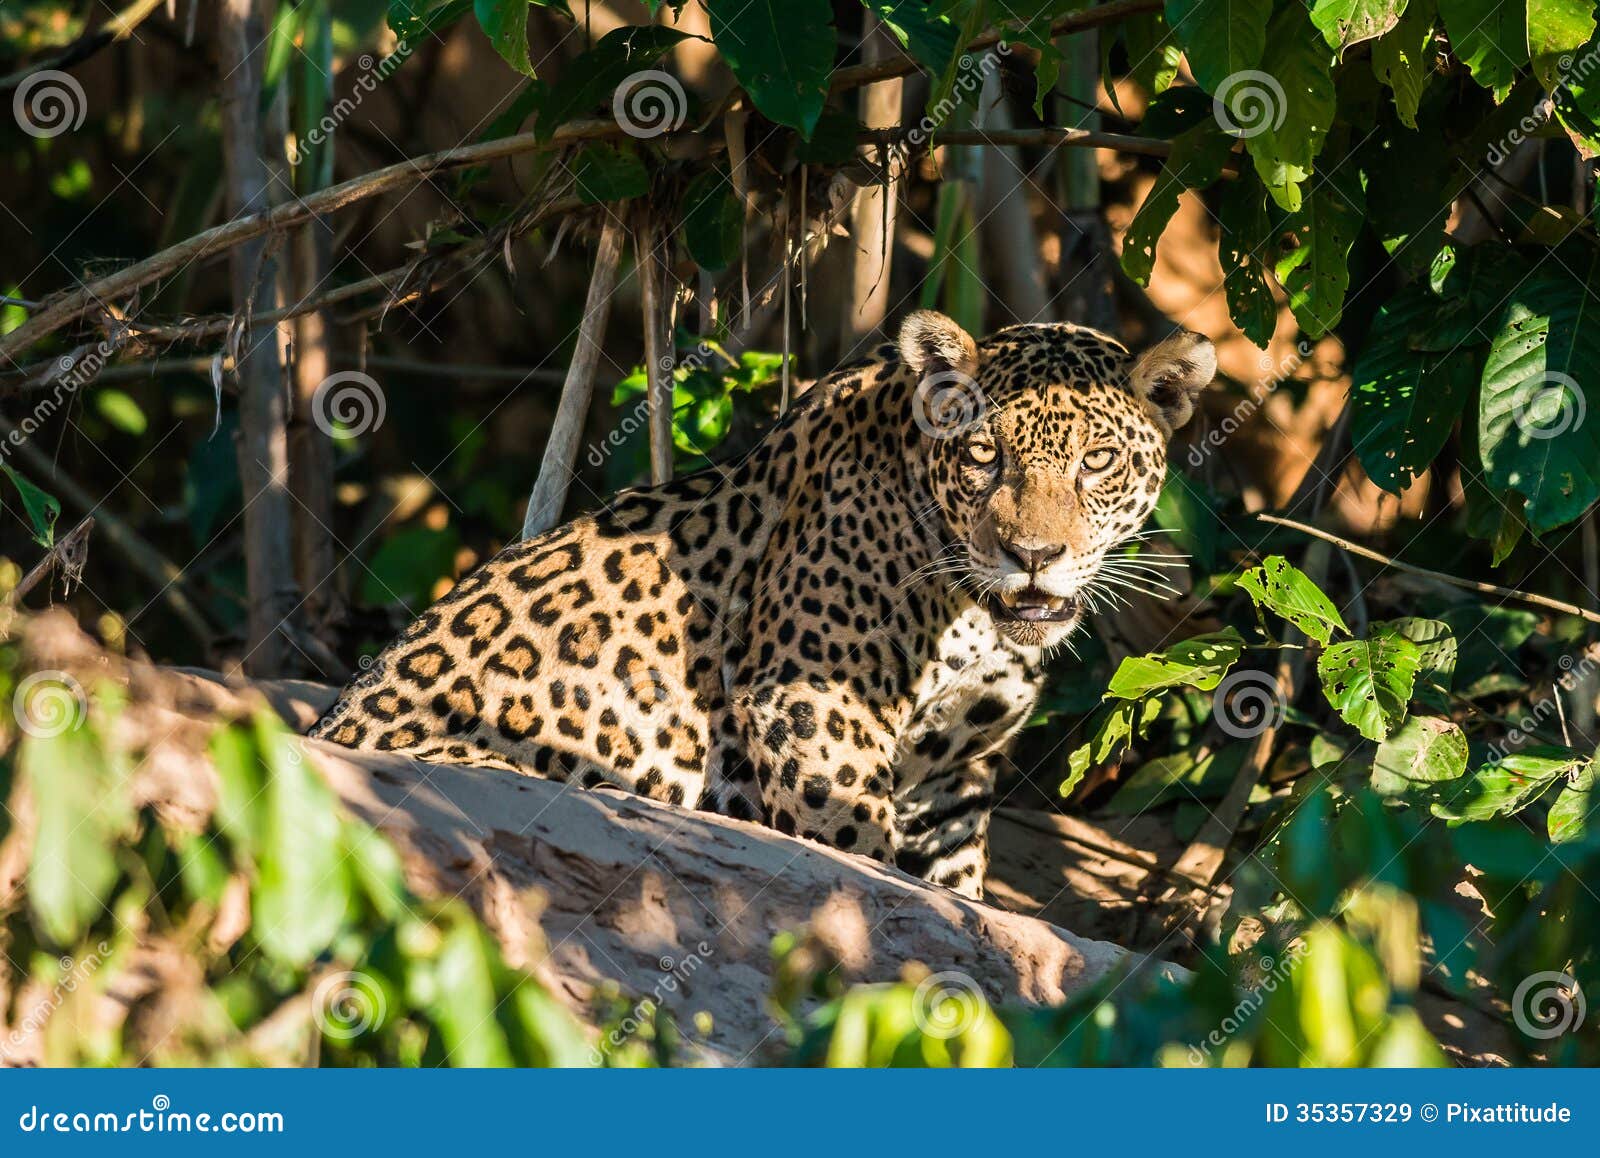 jaguar peruvian amazon jungle madre de dios peru